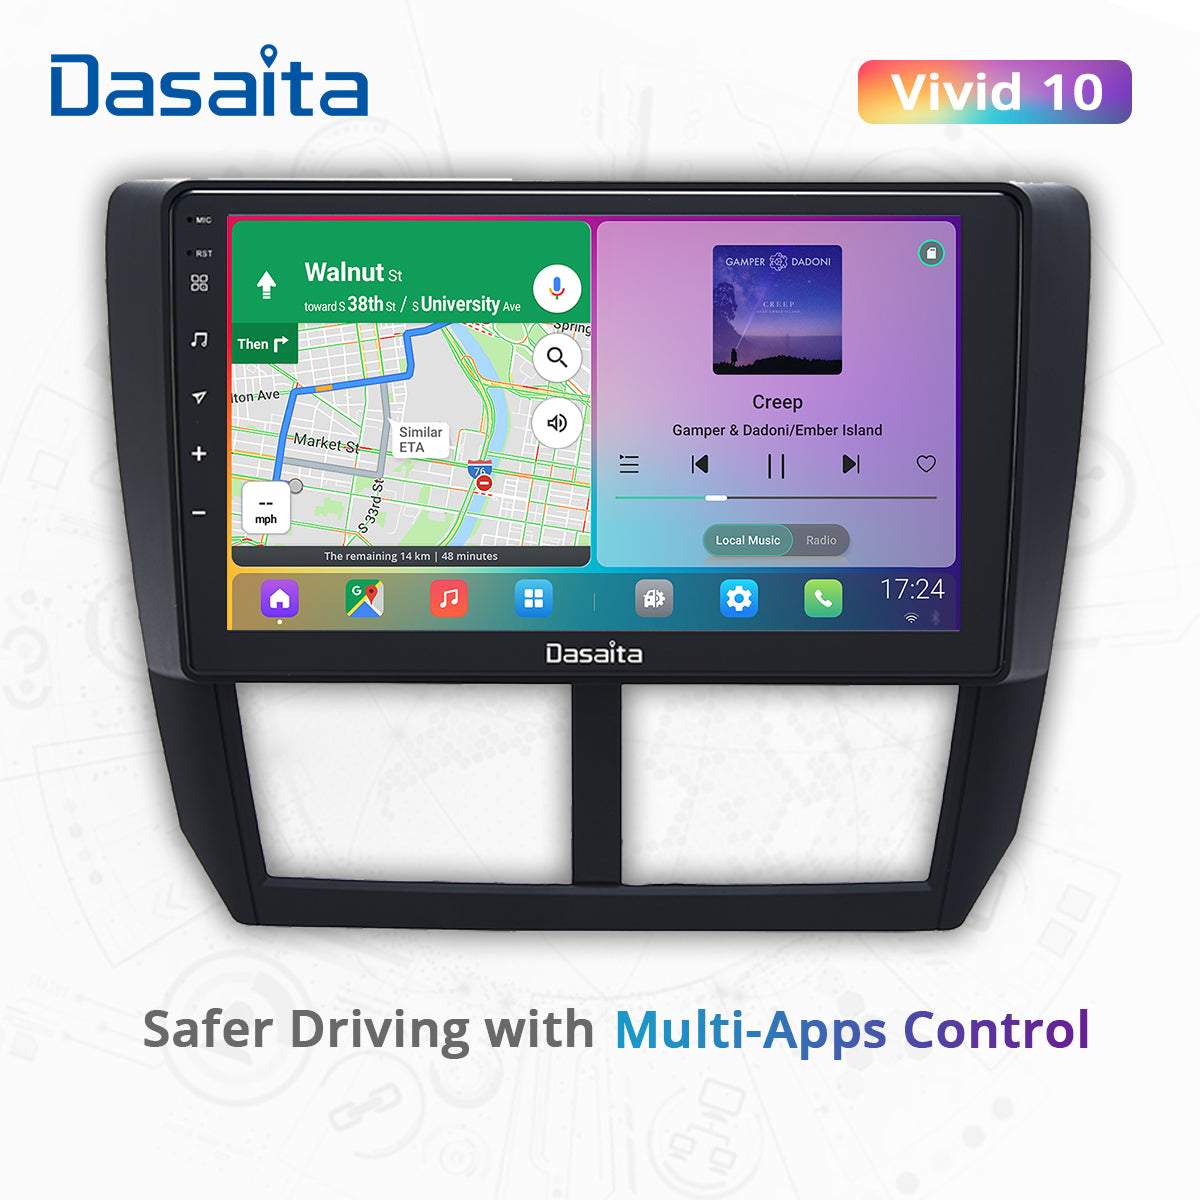 Dasaita Vivid11 Subaru Forester 3 Impreza 2007 2008 2009 2010 2011 2012 Car Stereo 9" Carplay Android Auto PX6 4G+64G Android11 1280*720 DSP Radio